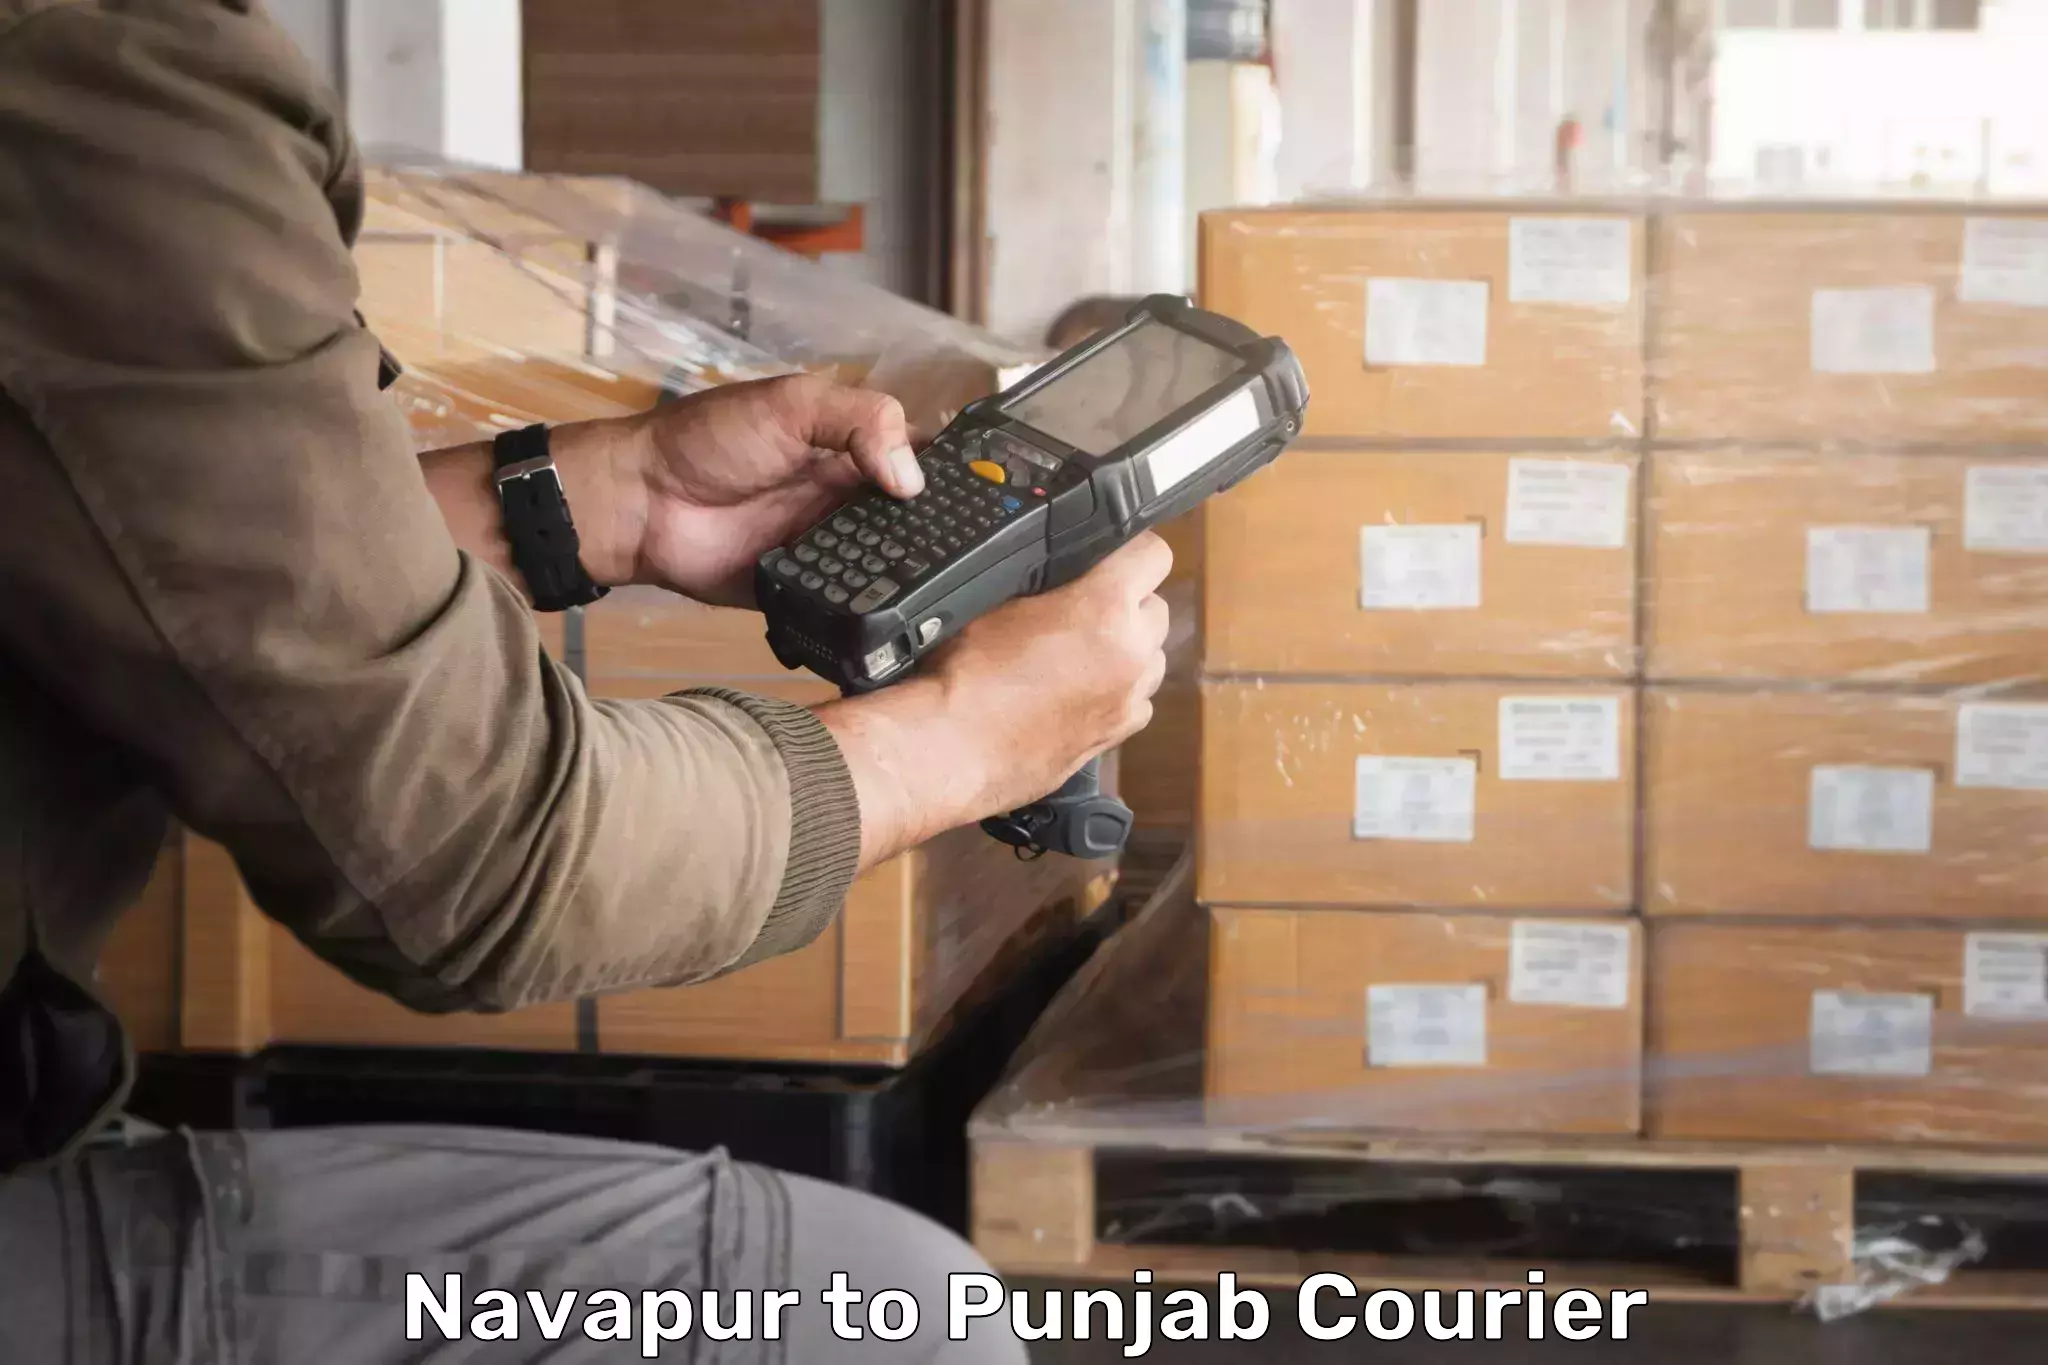 Premium courier services Navapur to Patiala